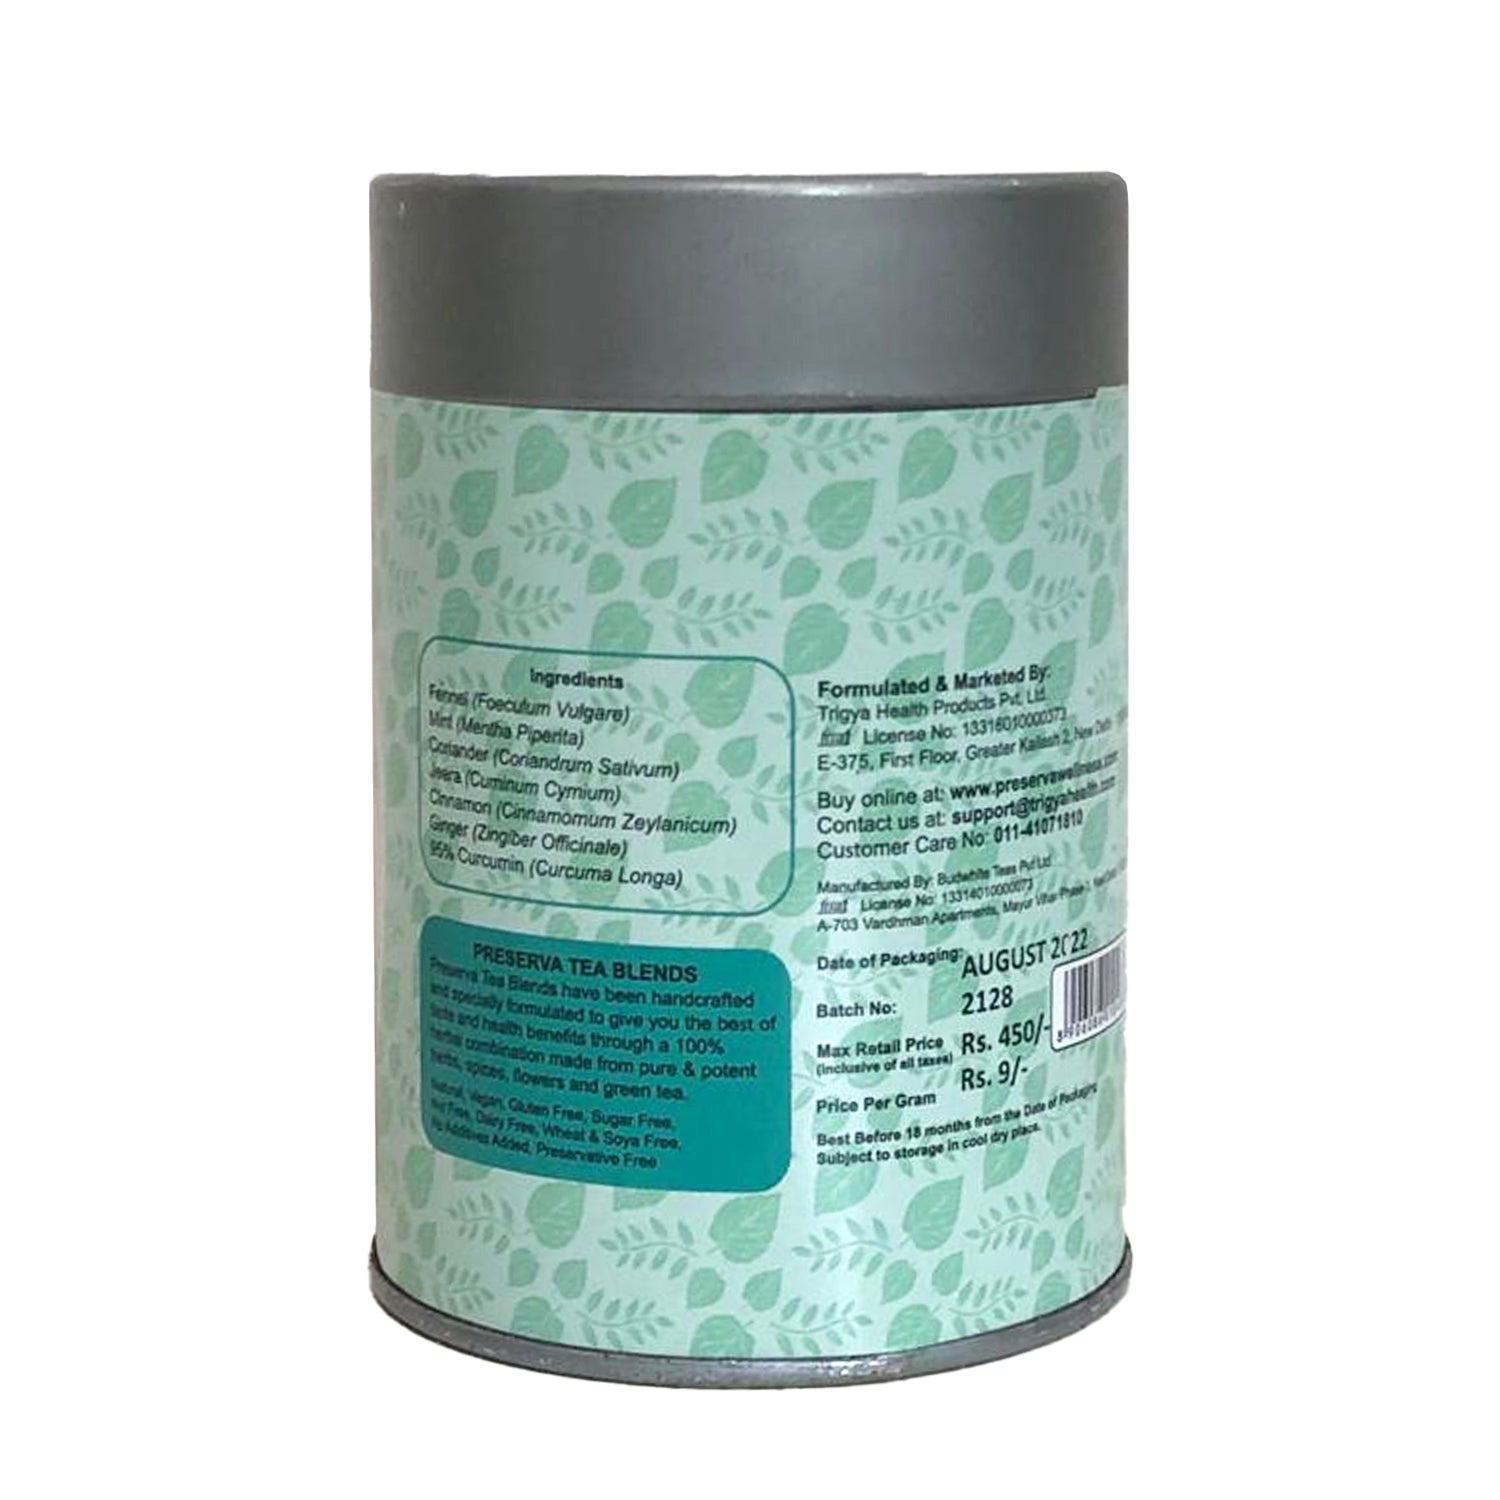 Preserva Wellness Daily Diagemax Tea Box 50 grams Back Lable.